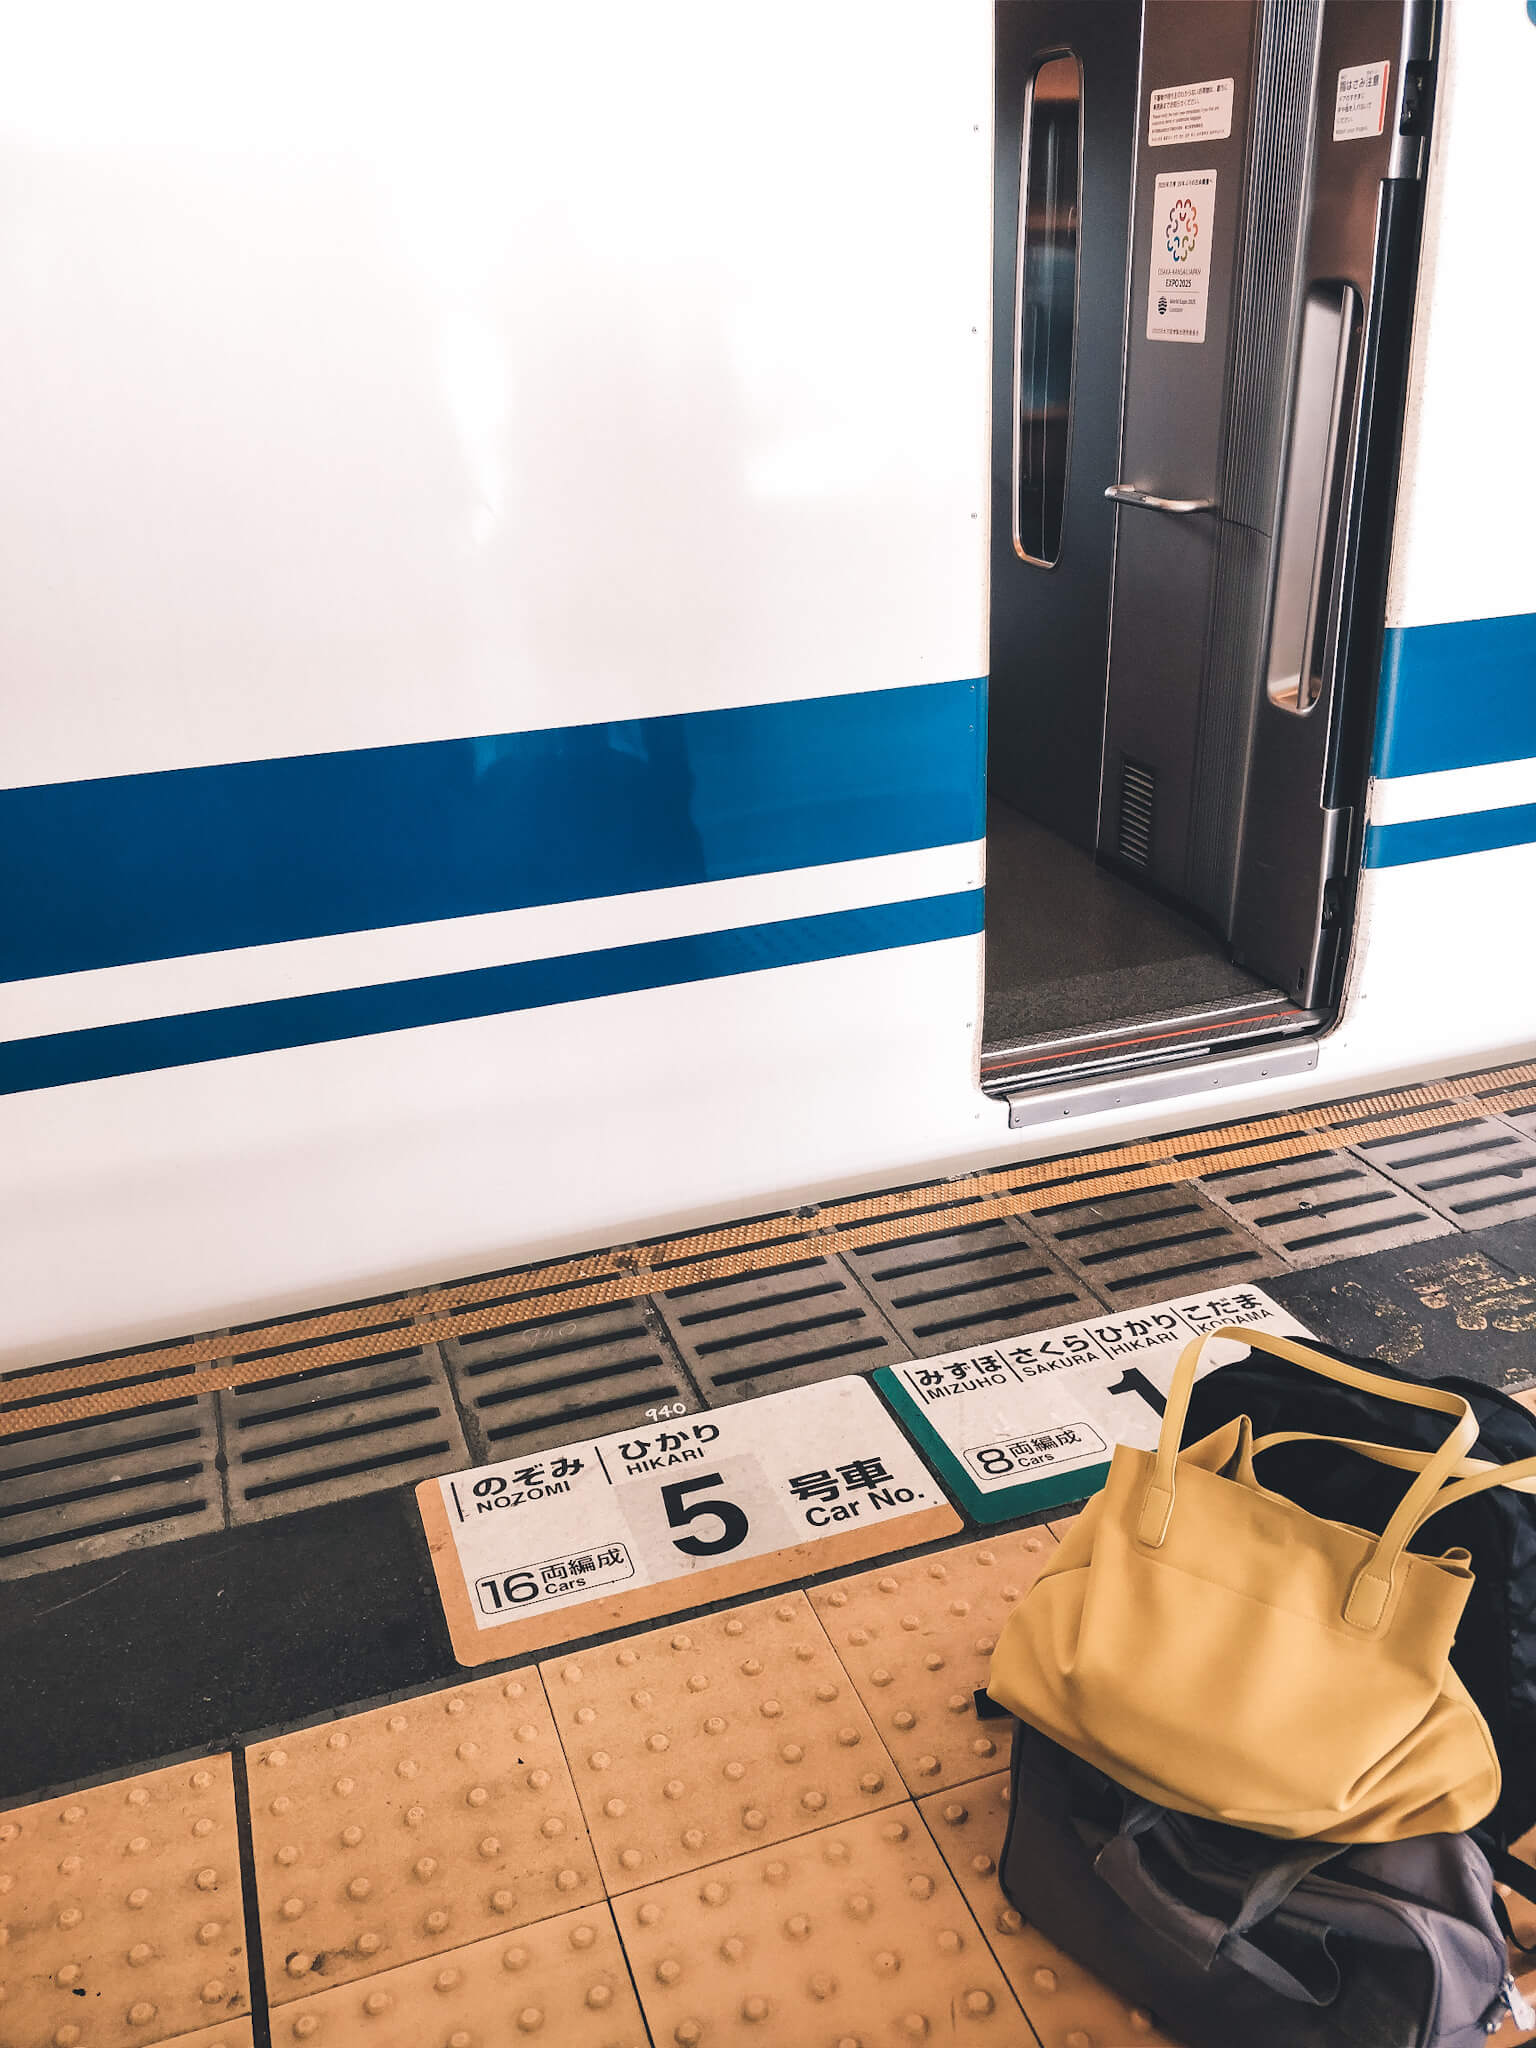 Japan Railpass nummers station